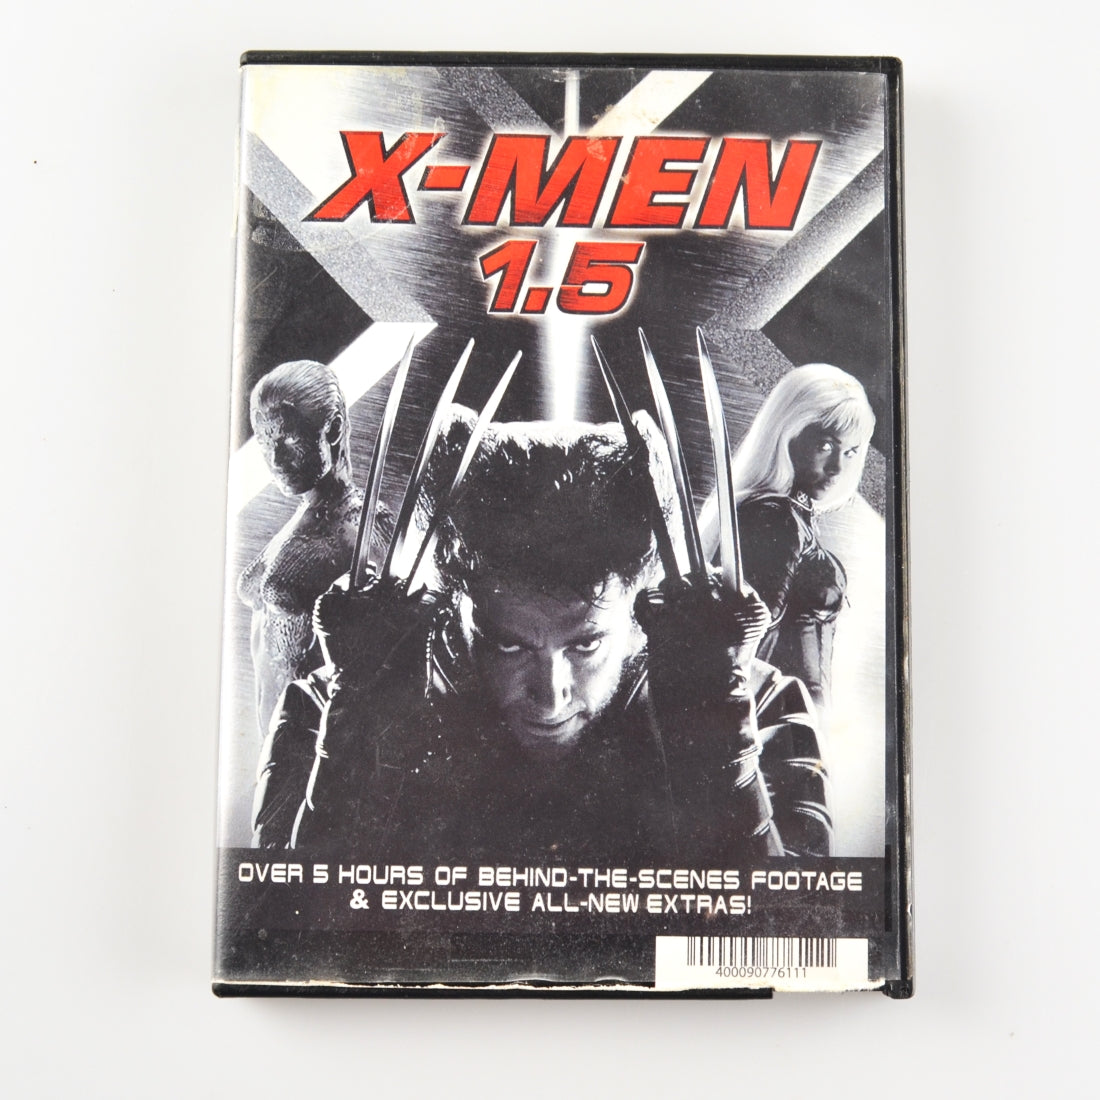 X-Men 1.5 (DVD, 2003, 2-Disc Set) Patrick Stewart, Ian Mckellen